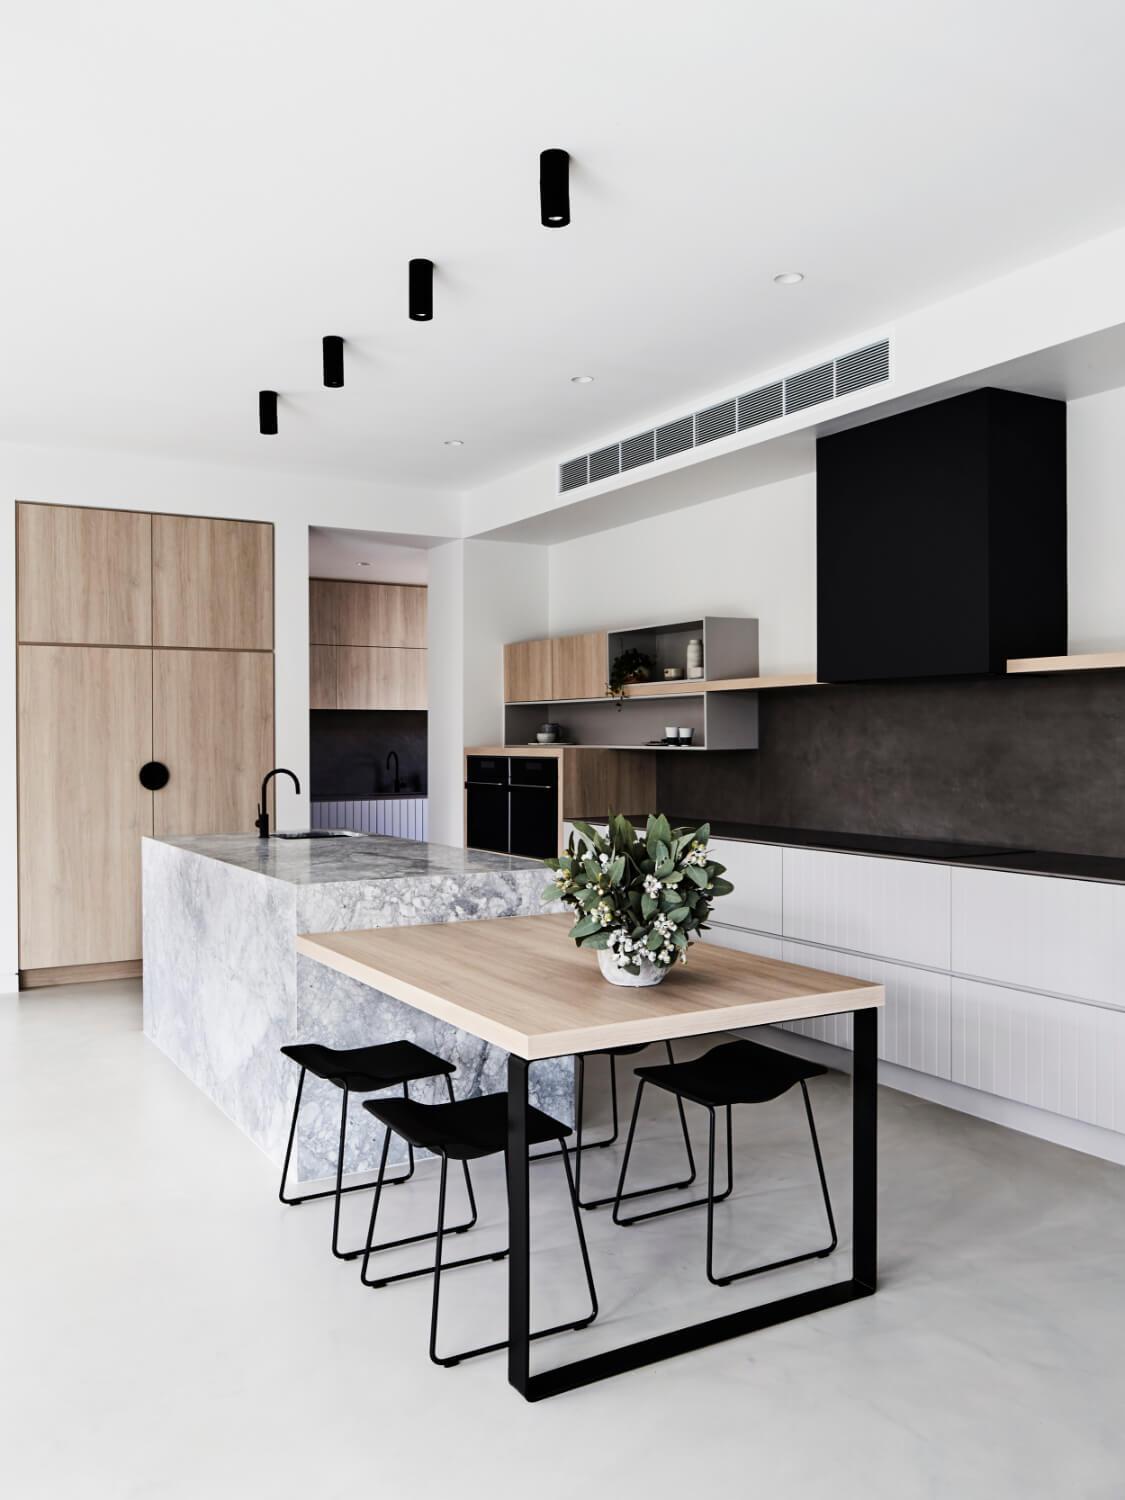 Thomas Archer's Landmark Custom Design kitchen featured in Home Beautiful magazine